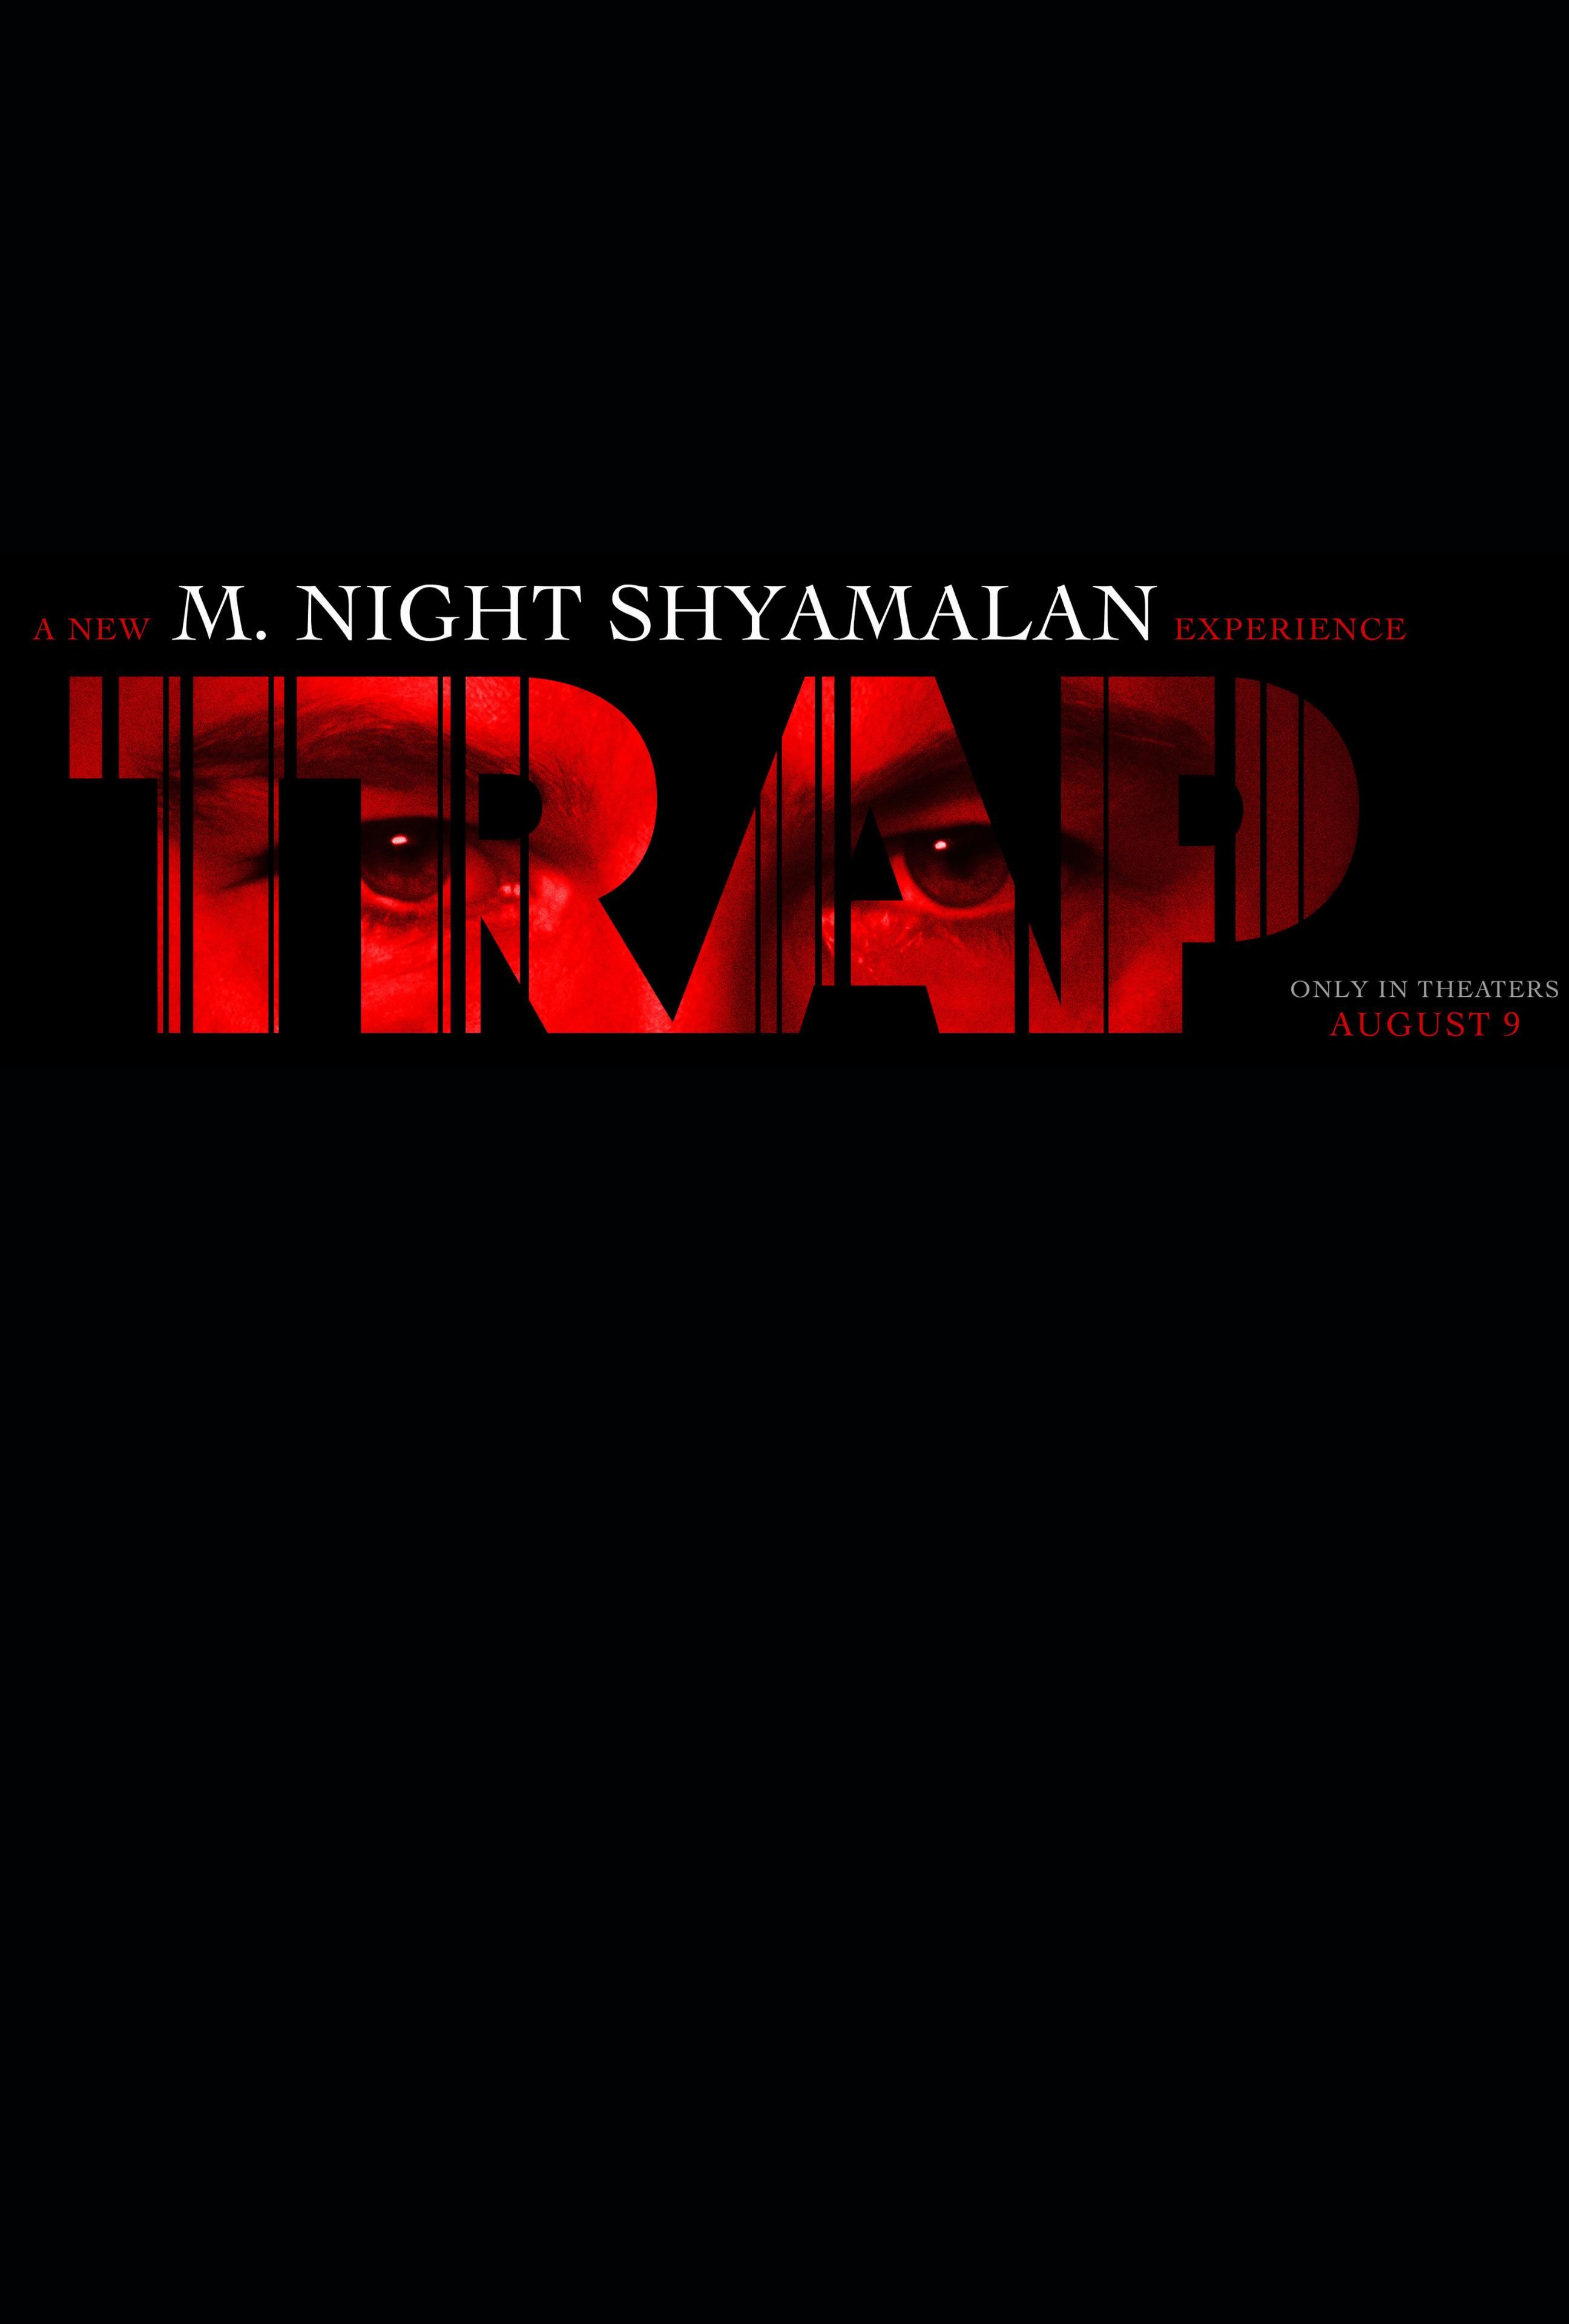 Trap 2024 Film Poster